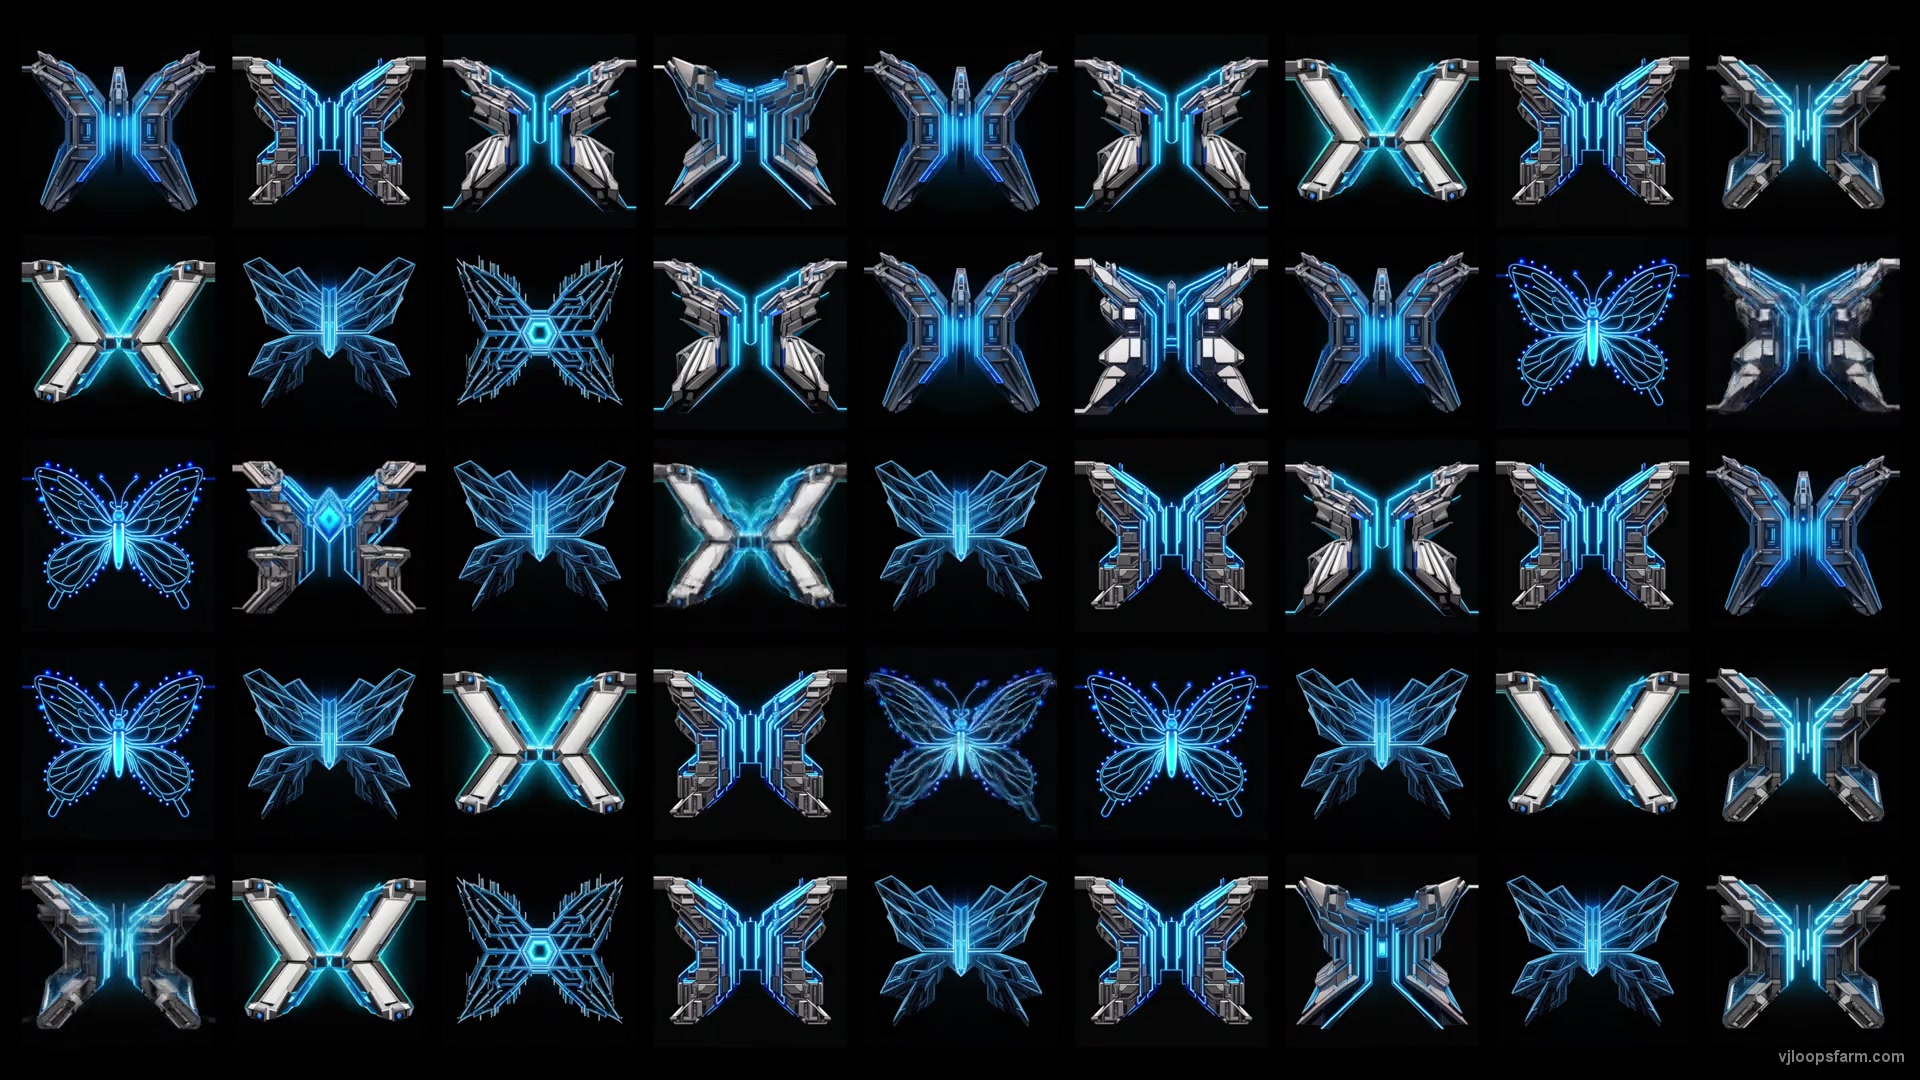 Cyberpunk Butterfly Mesh Mix Pattern Random Video Motion Background